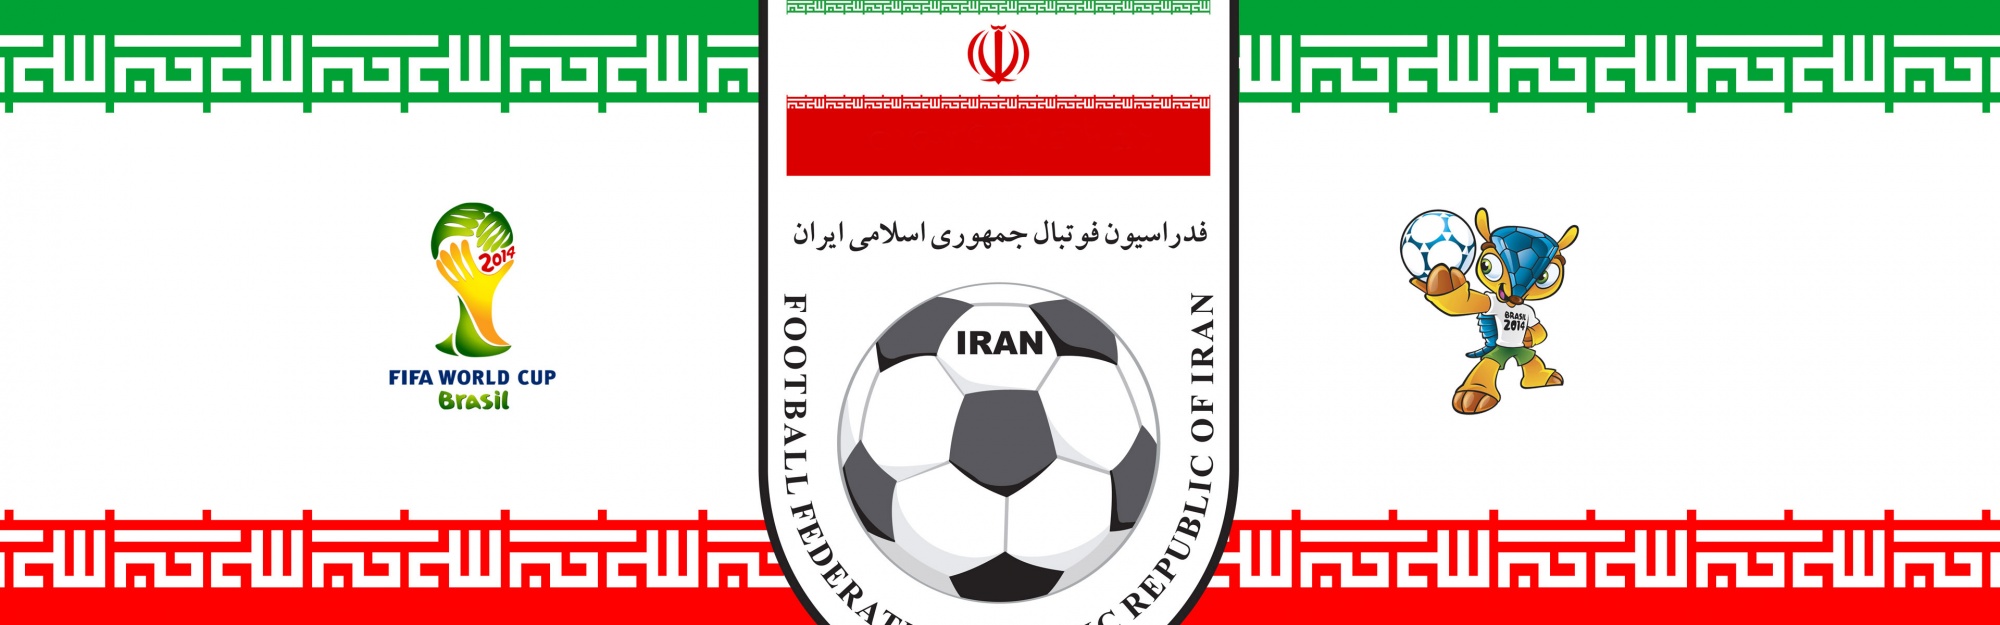 Team Melli Iran Football Crest Logo